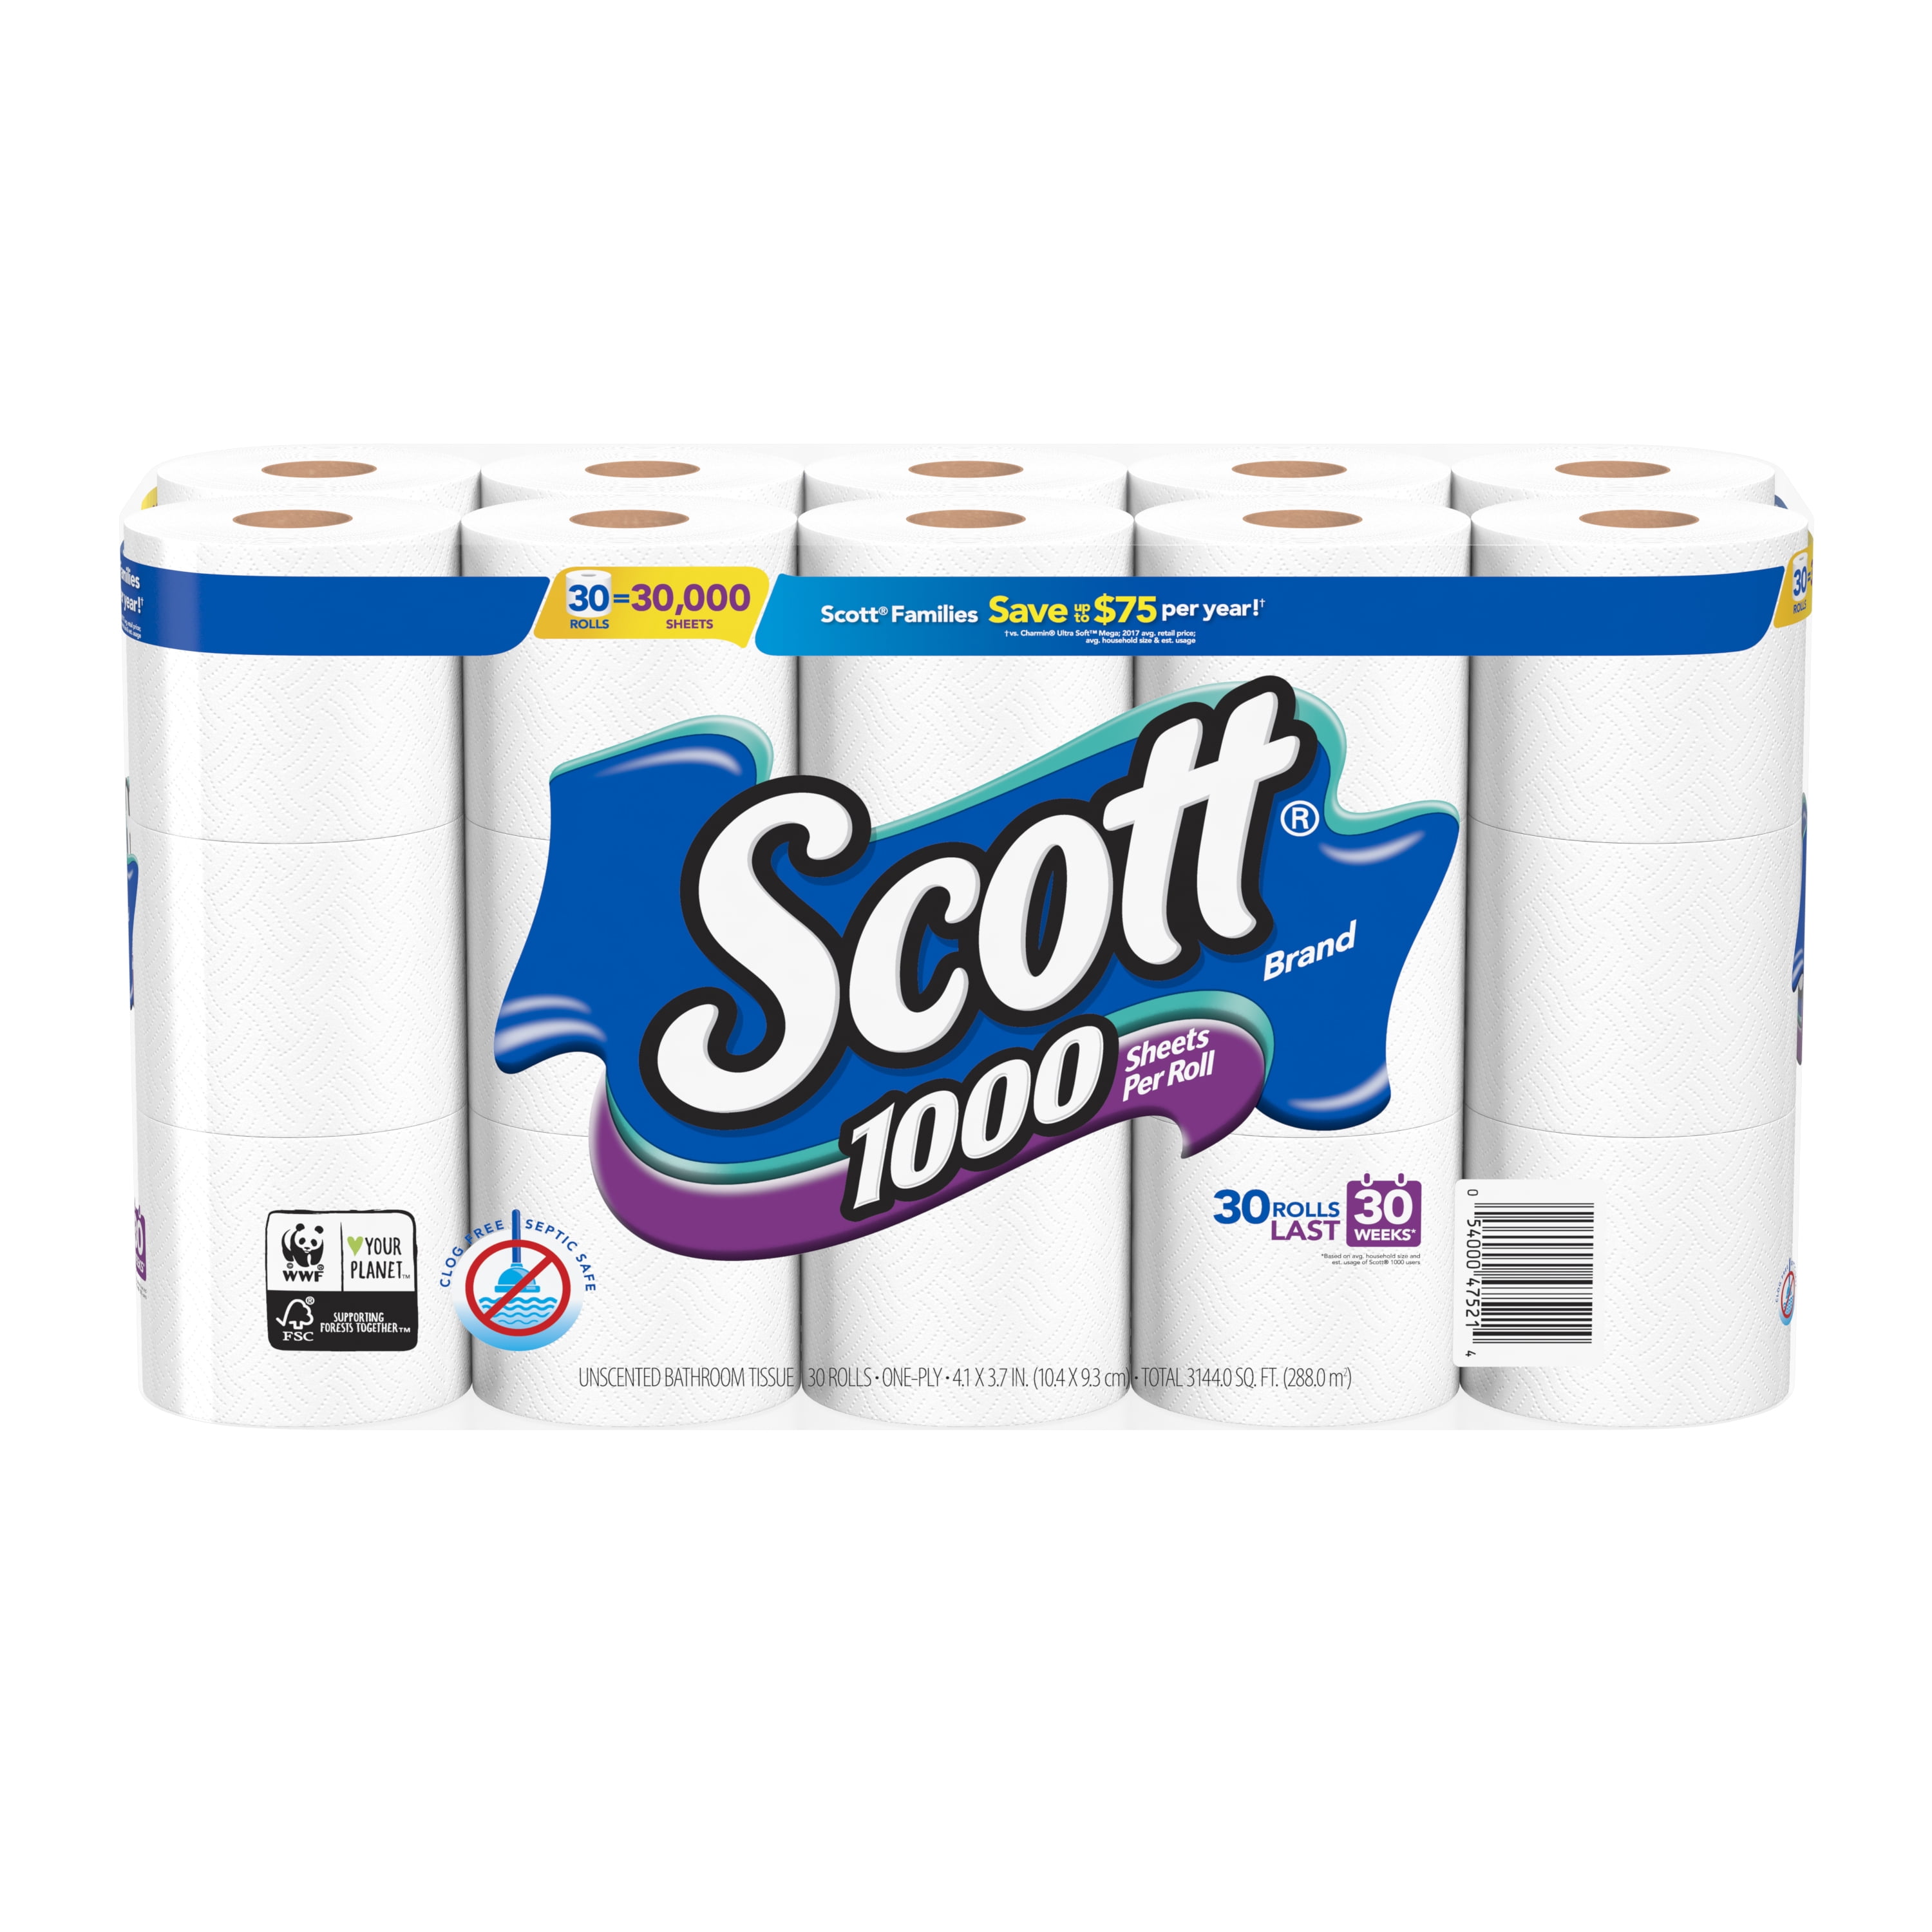 scott-1000-toilet-paper-30-rolls-30-000-sheets-walmart-inventory